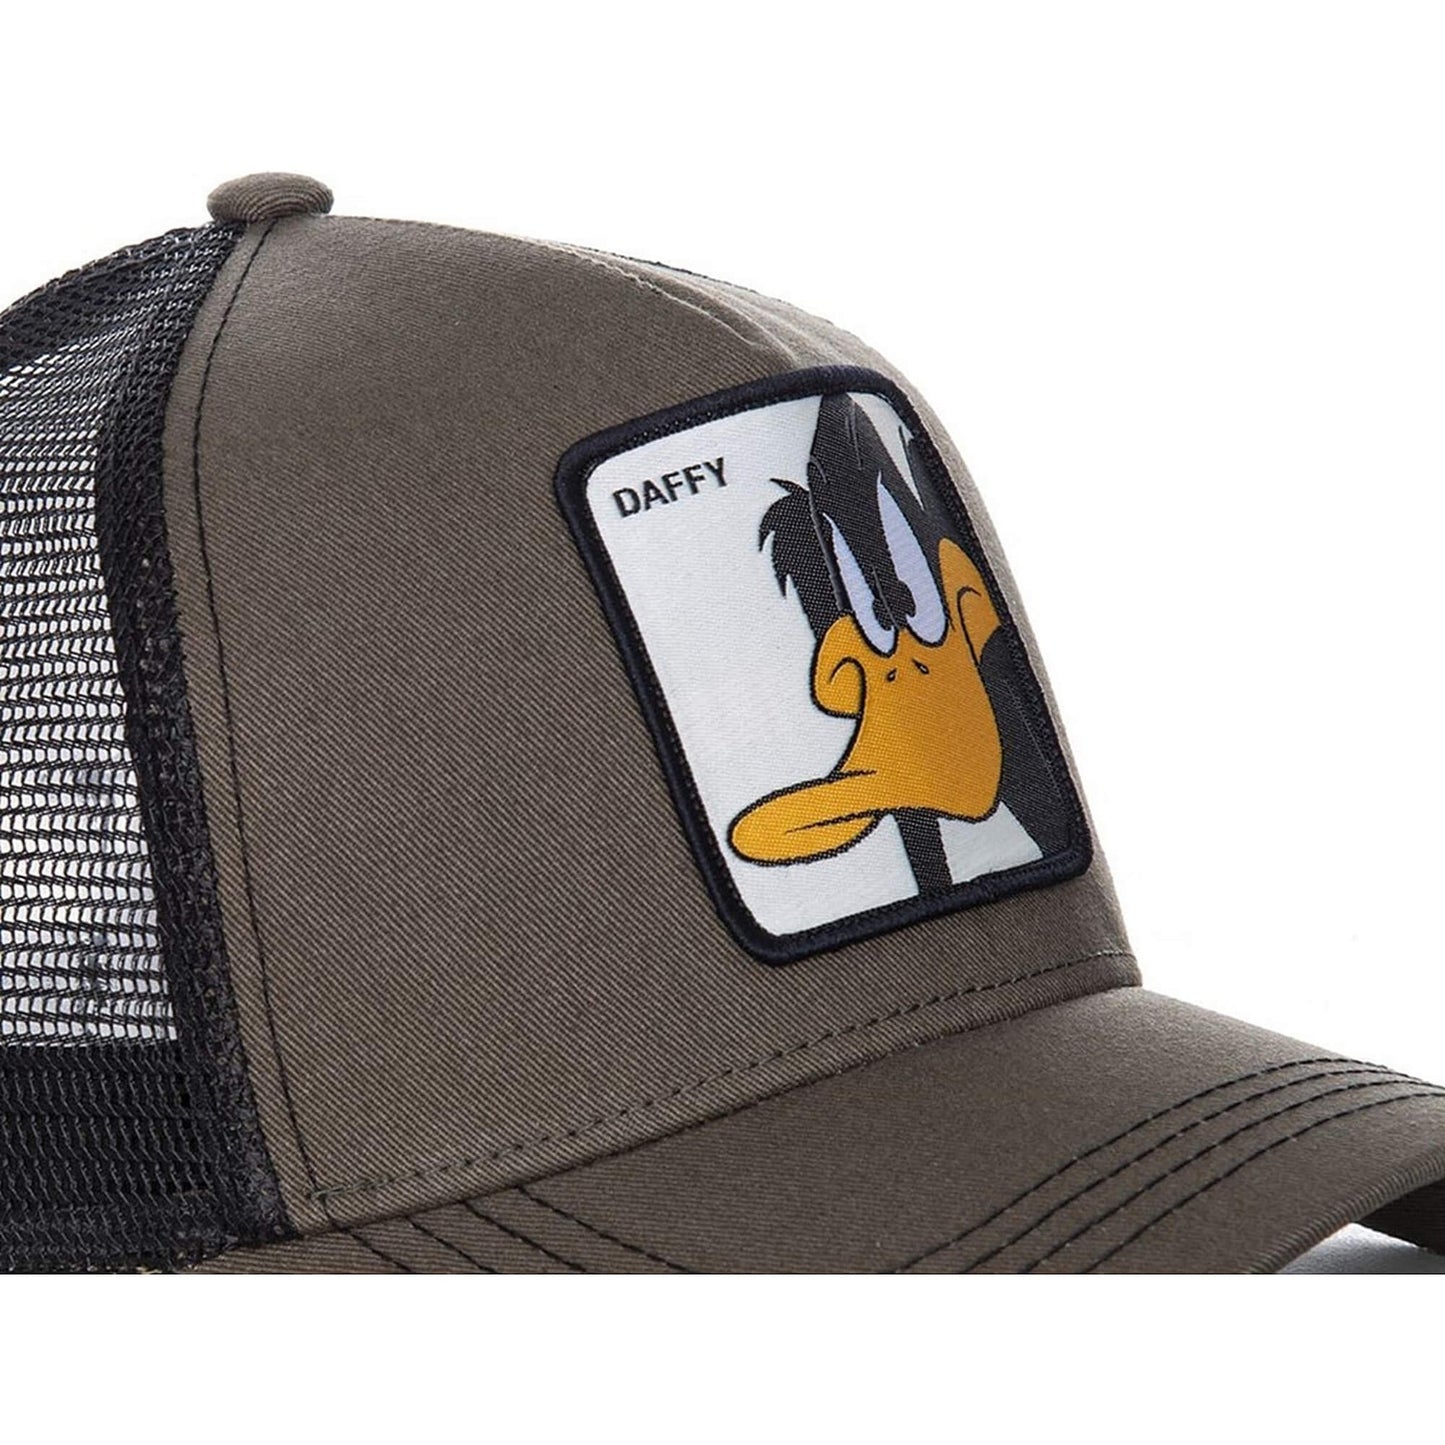 Capslab Cap By Freegun Looney Tunes Daffy Duck Green